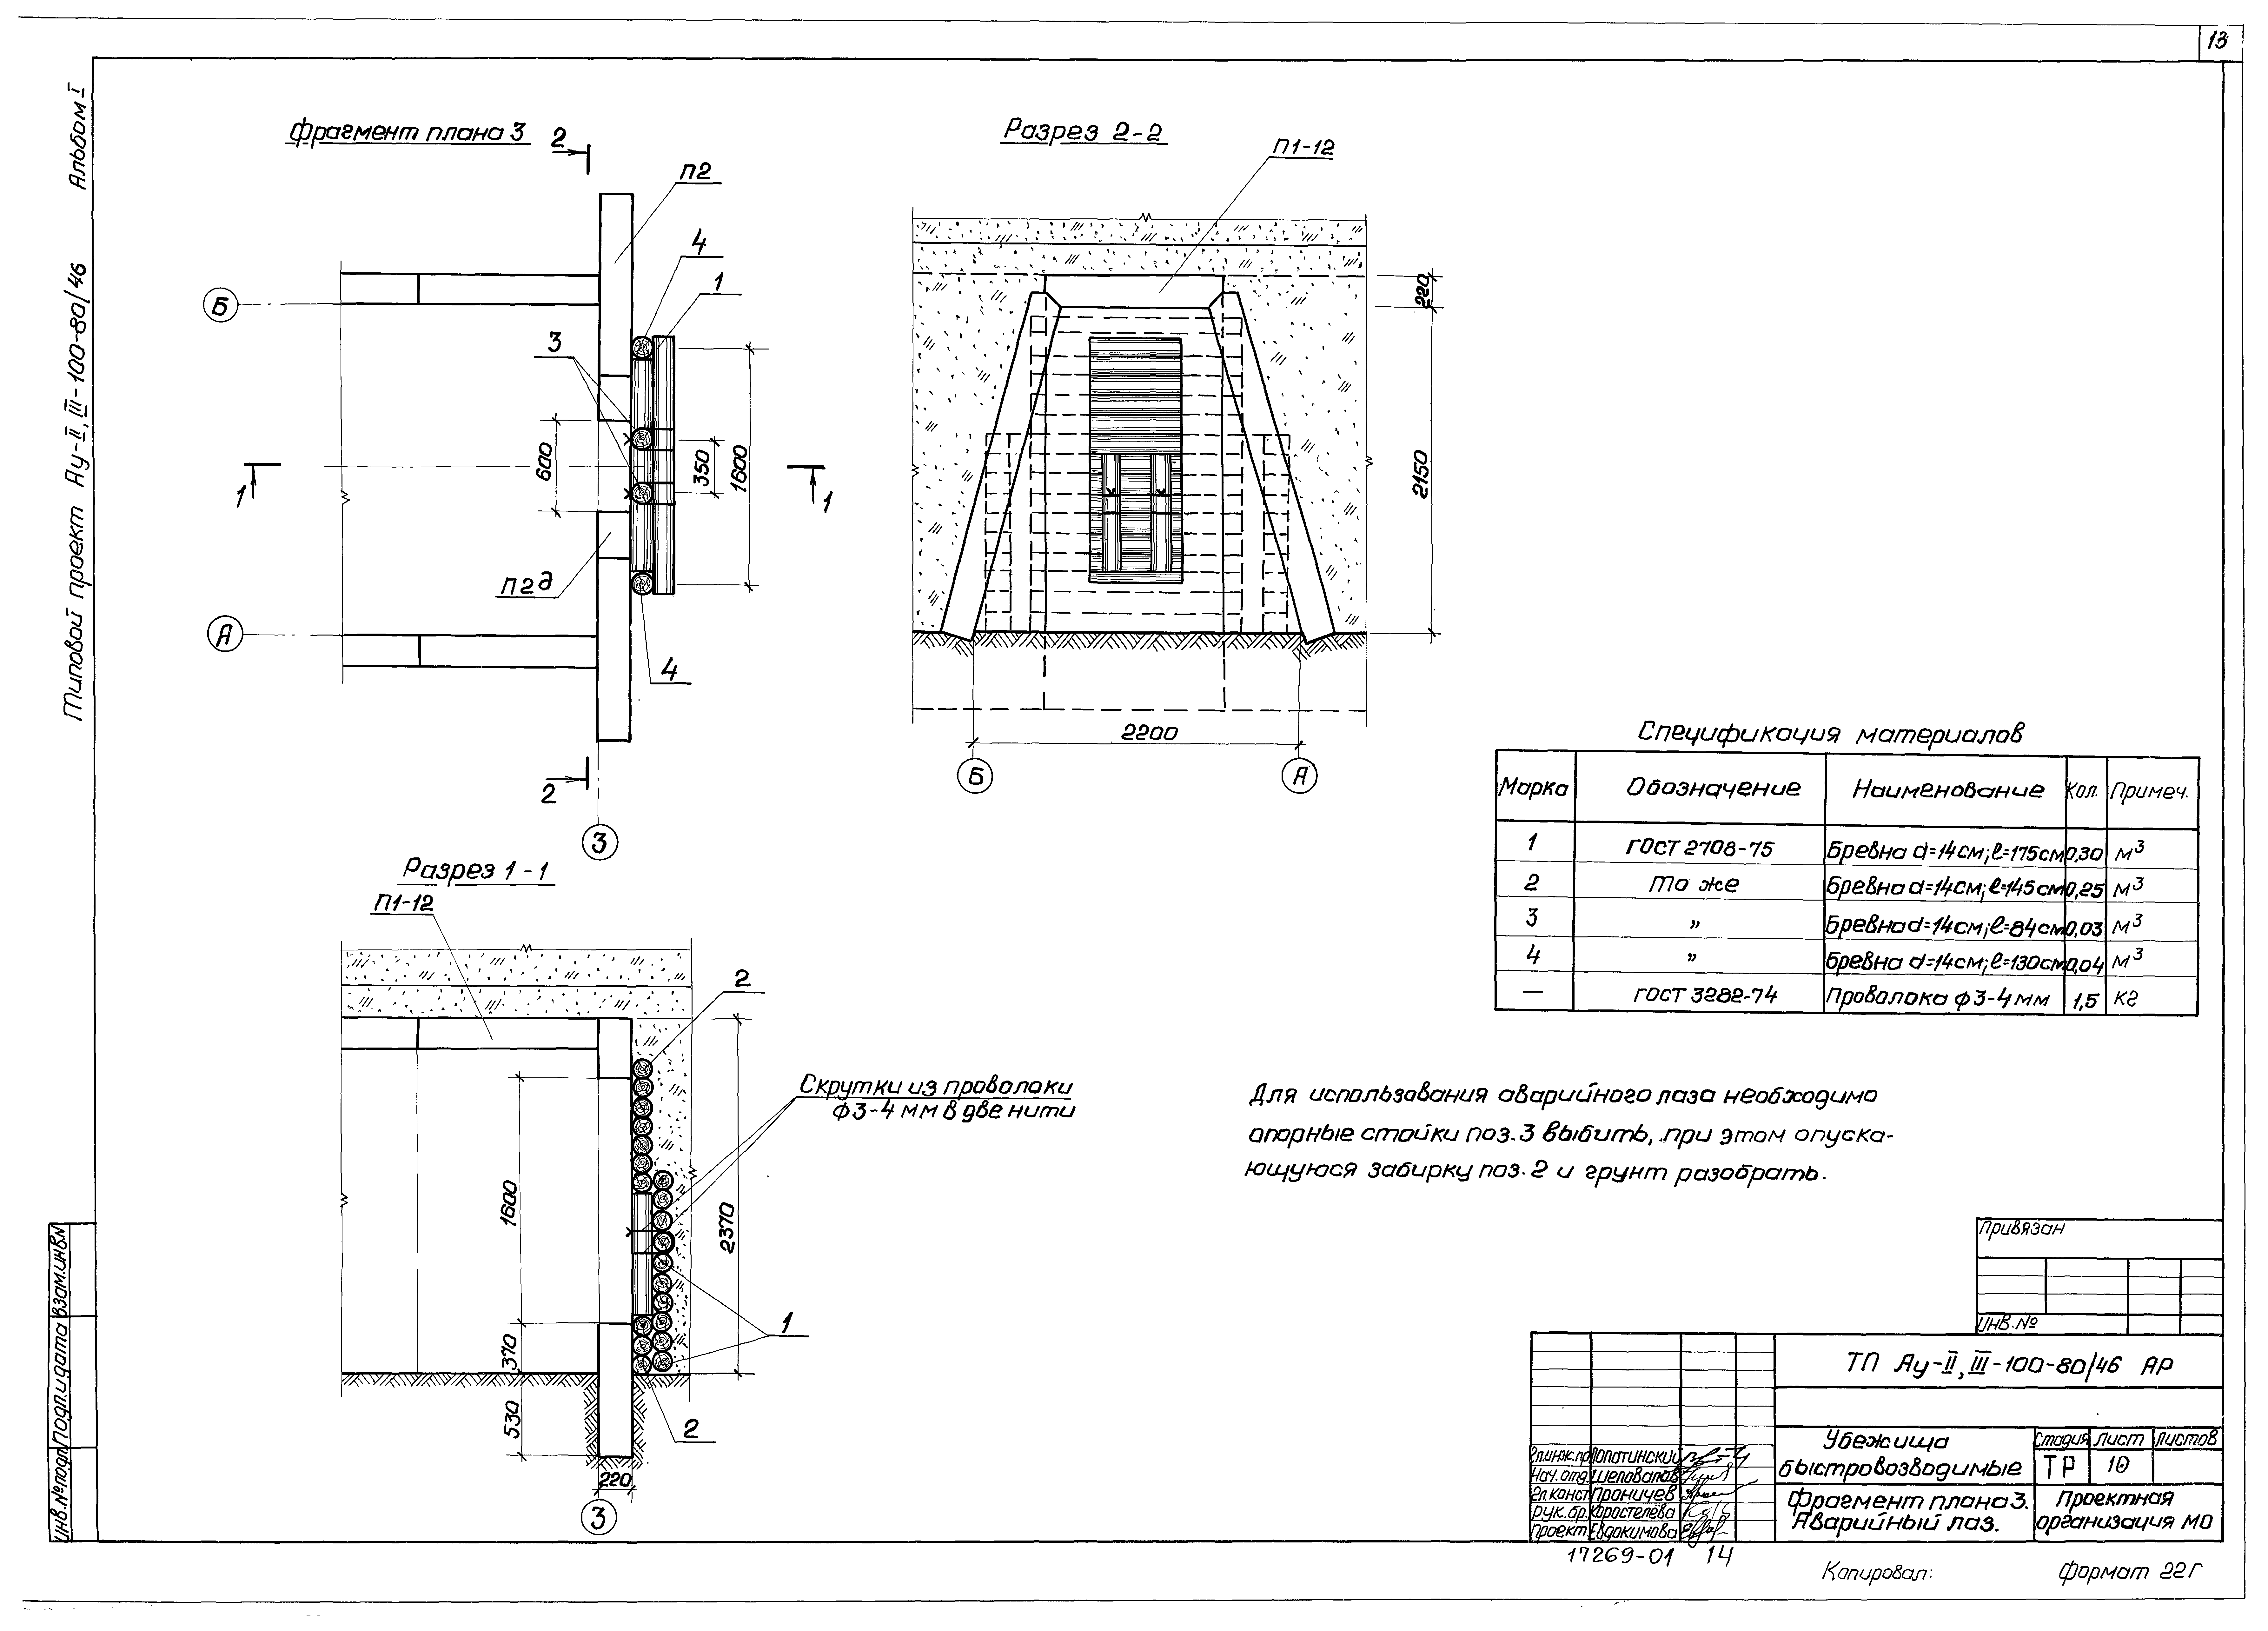 Типовой проект Ау-II,III-100-80/46